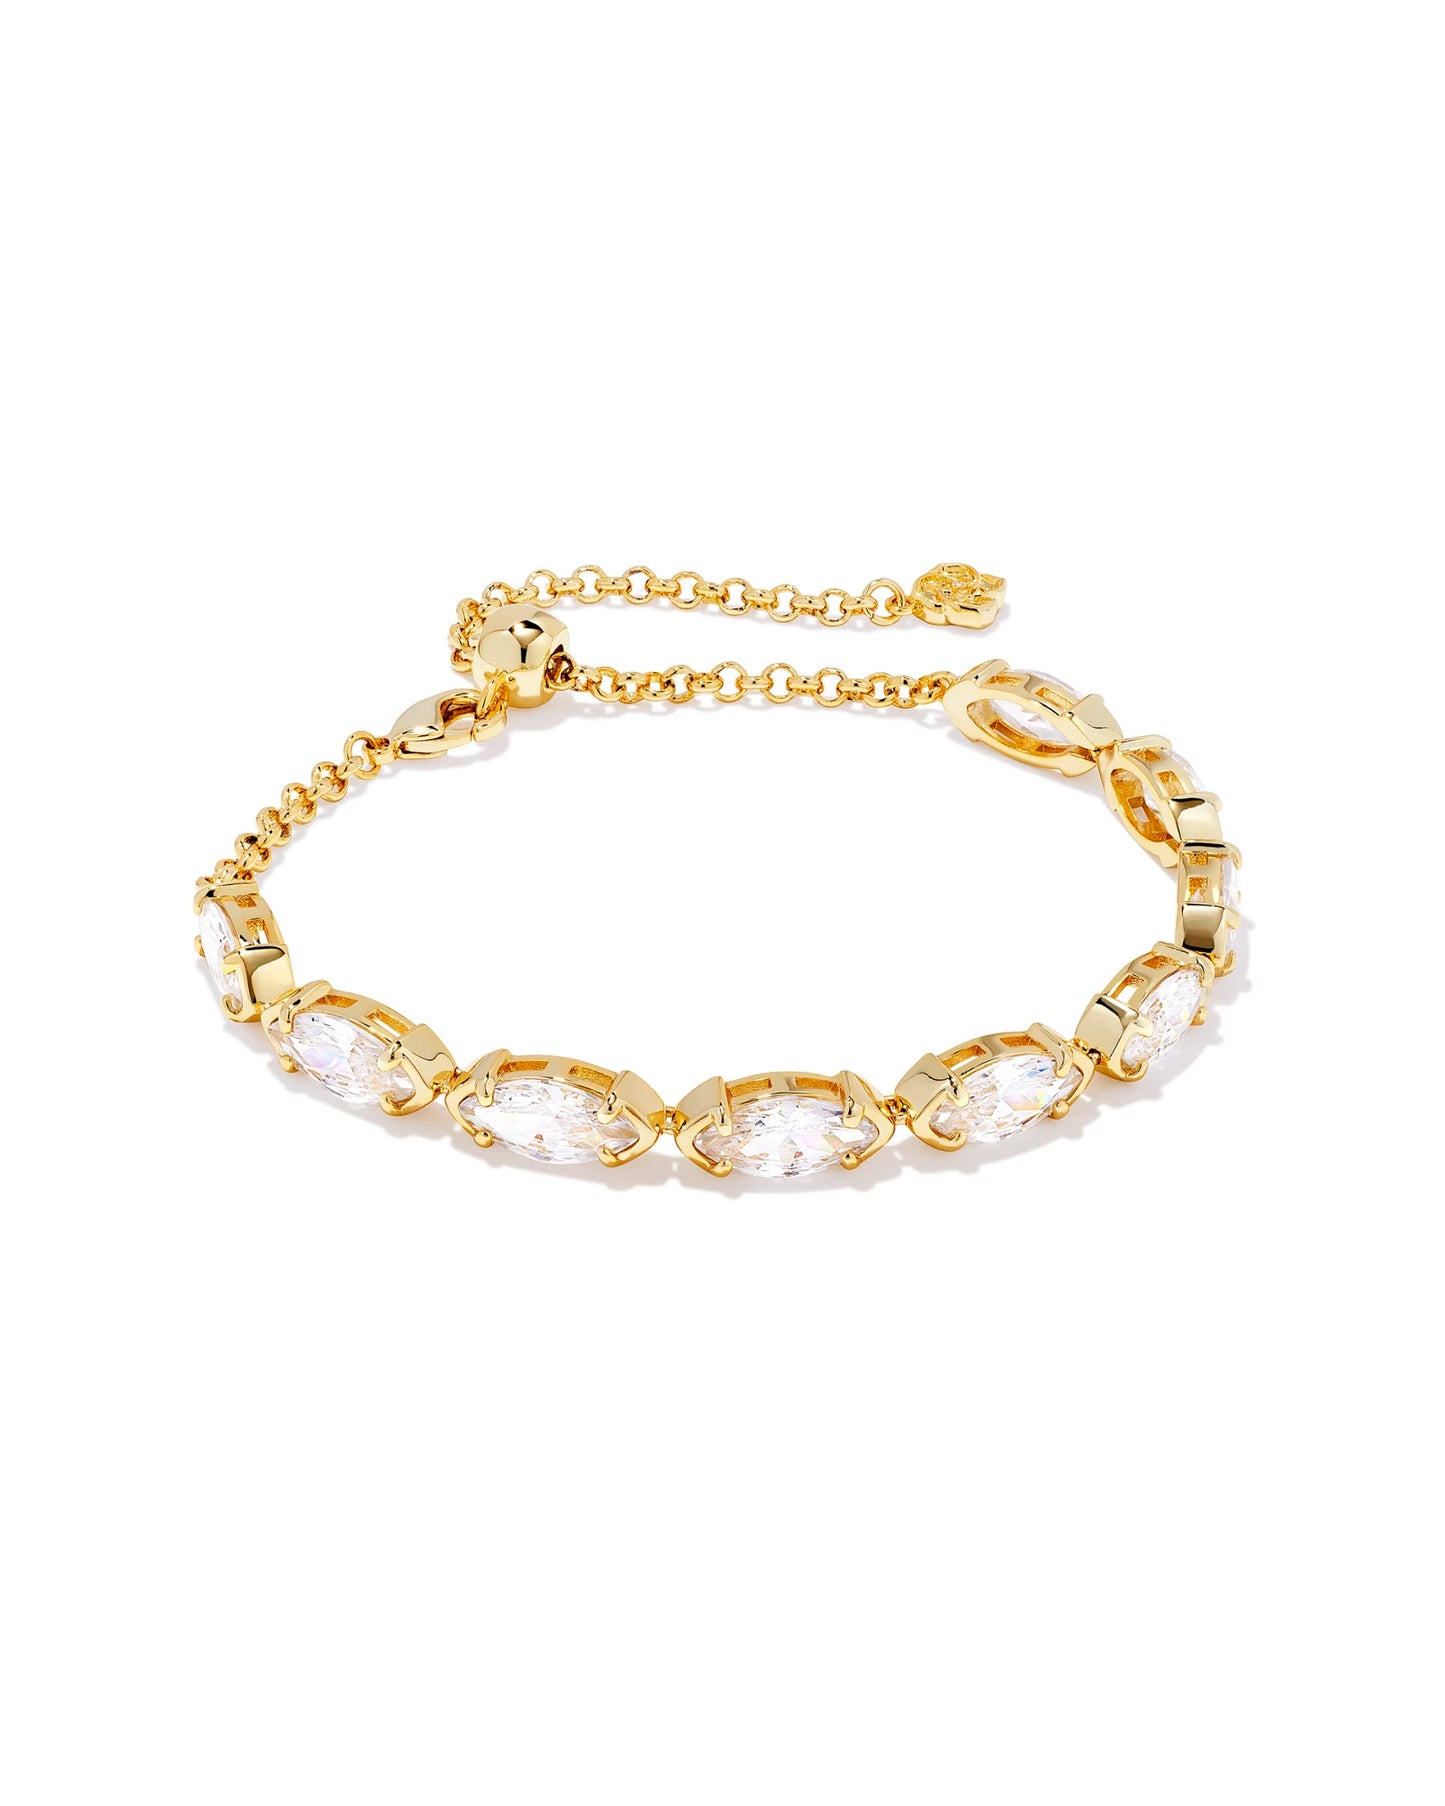 Genevieve Delicate Chain Bracelet